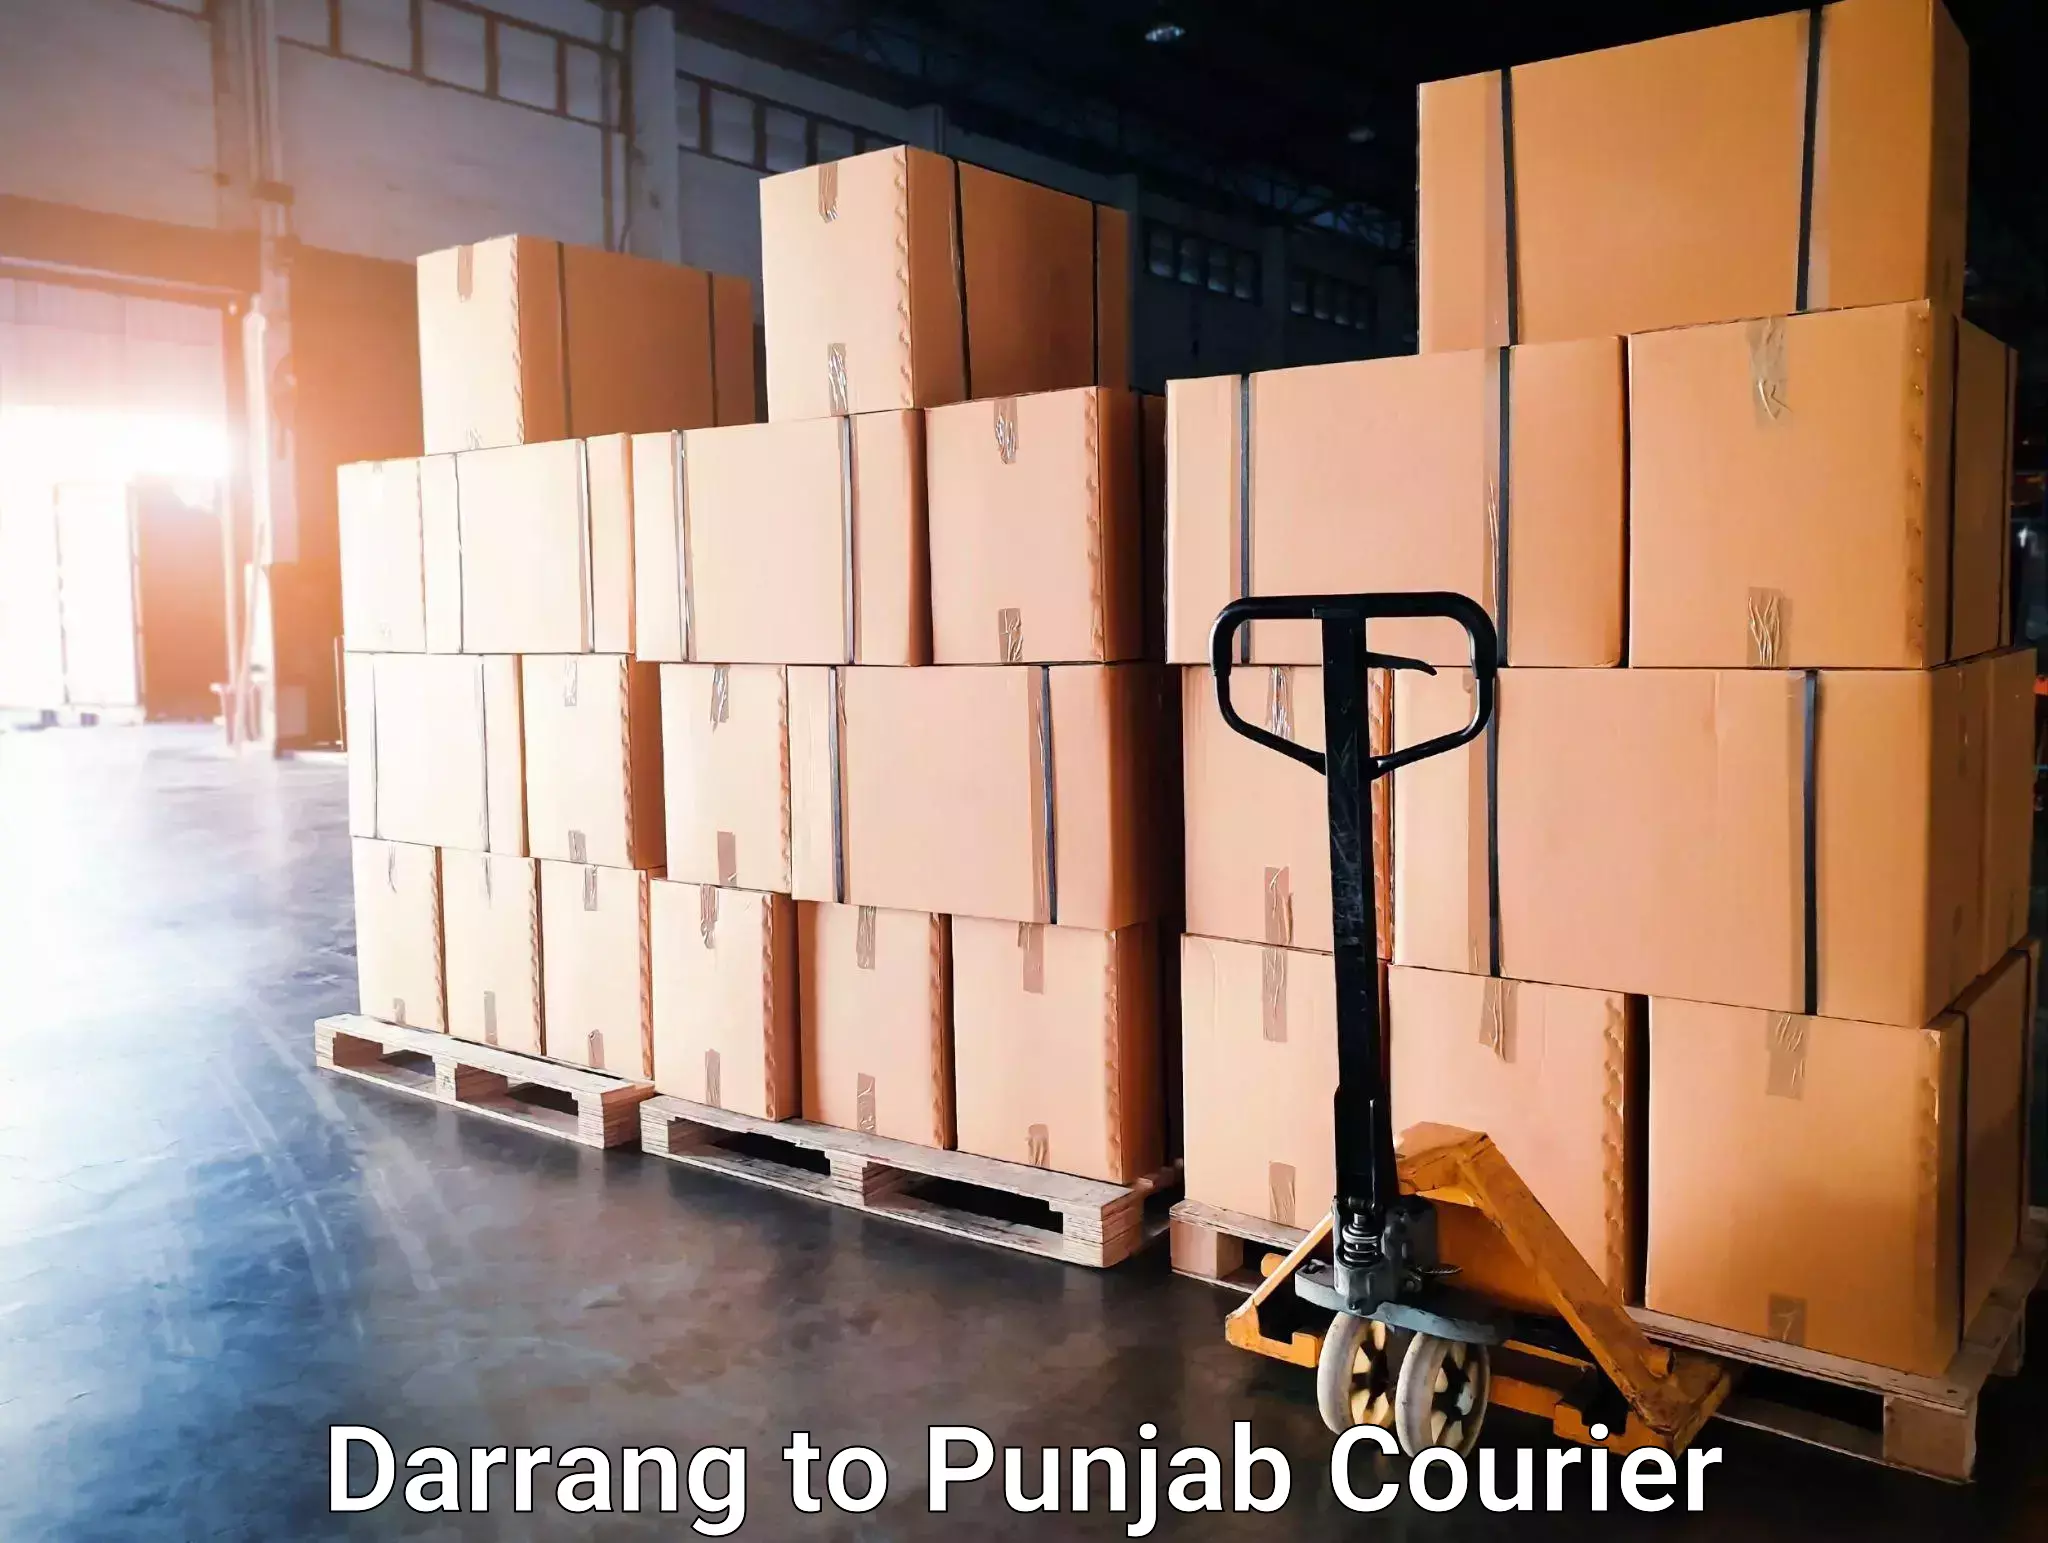 Advanced delivery network Darrang to Dinanagar